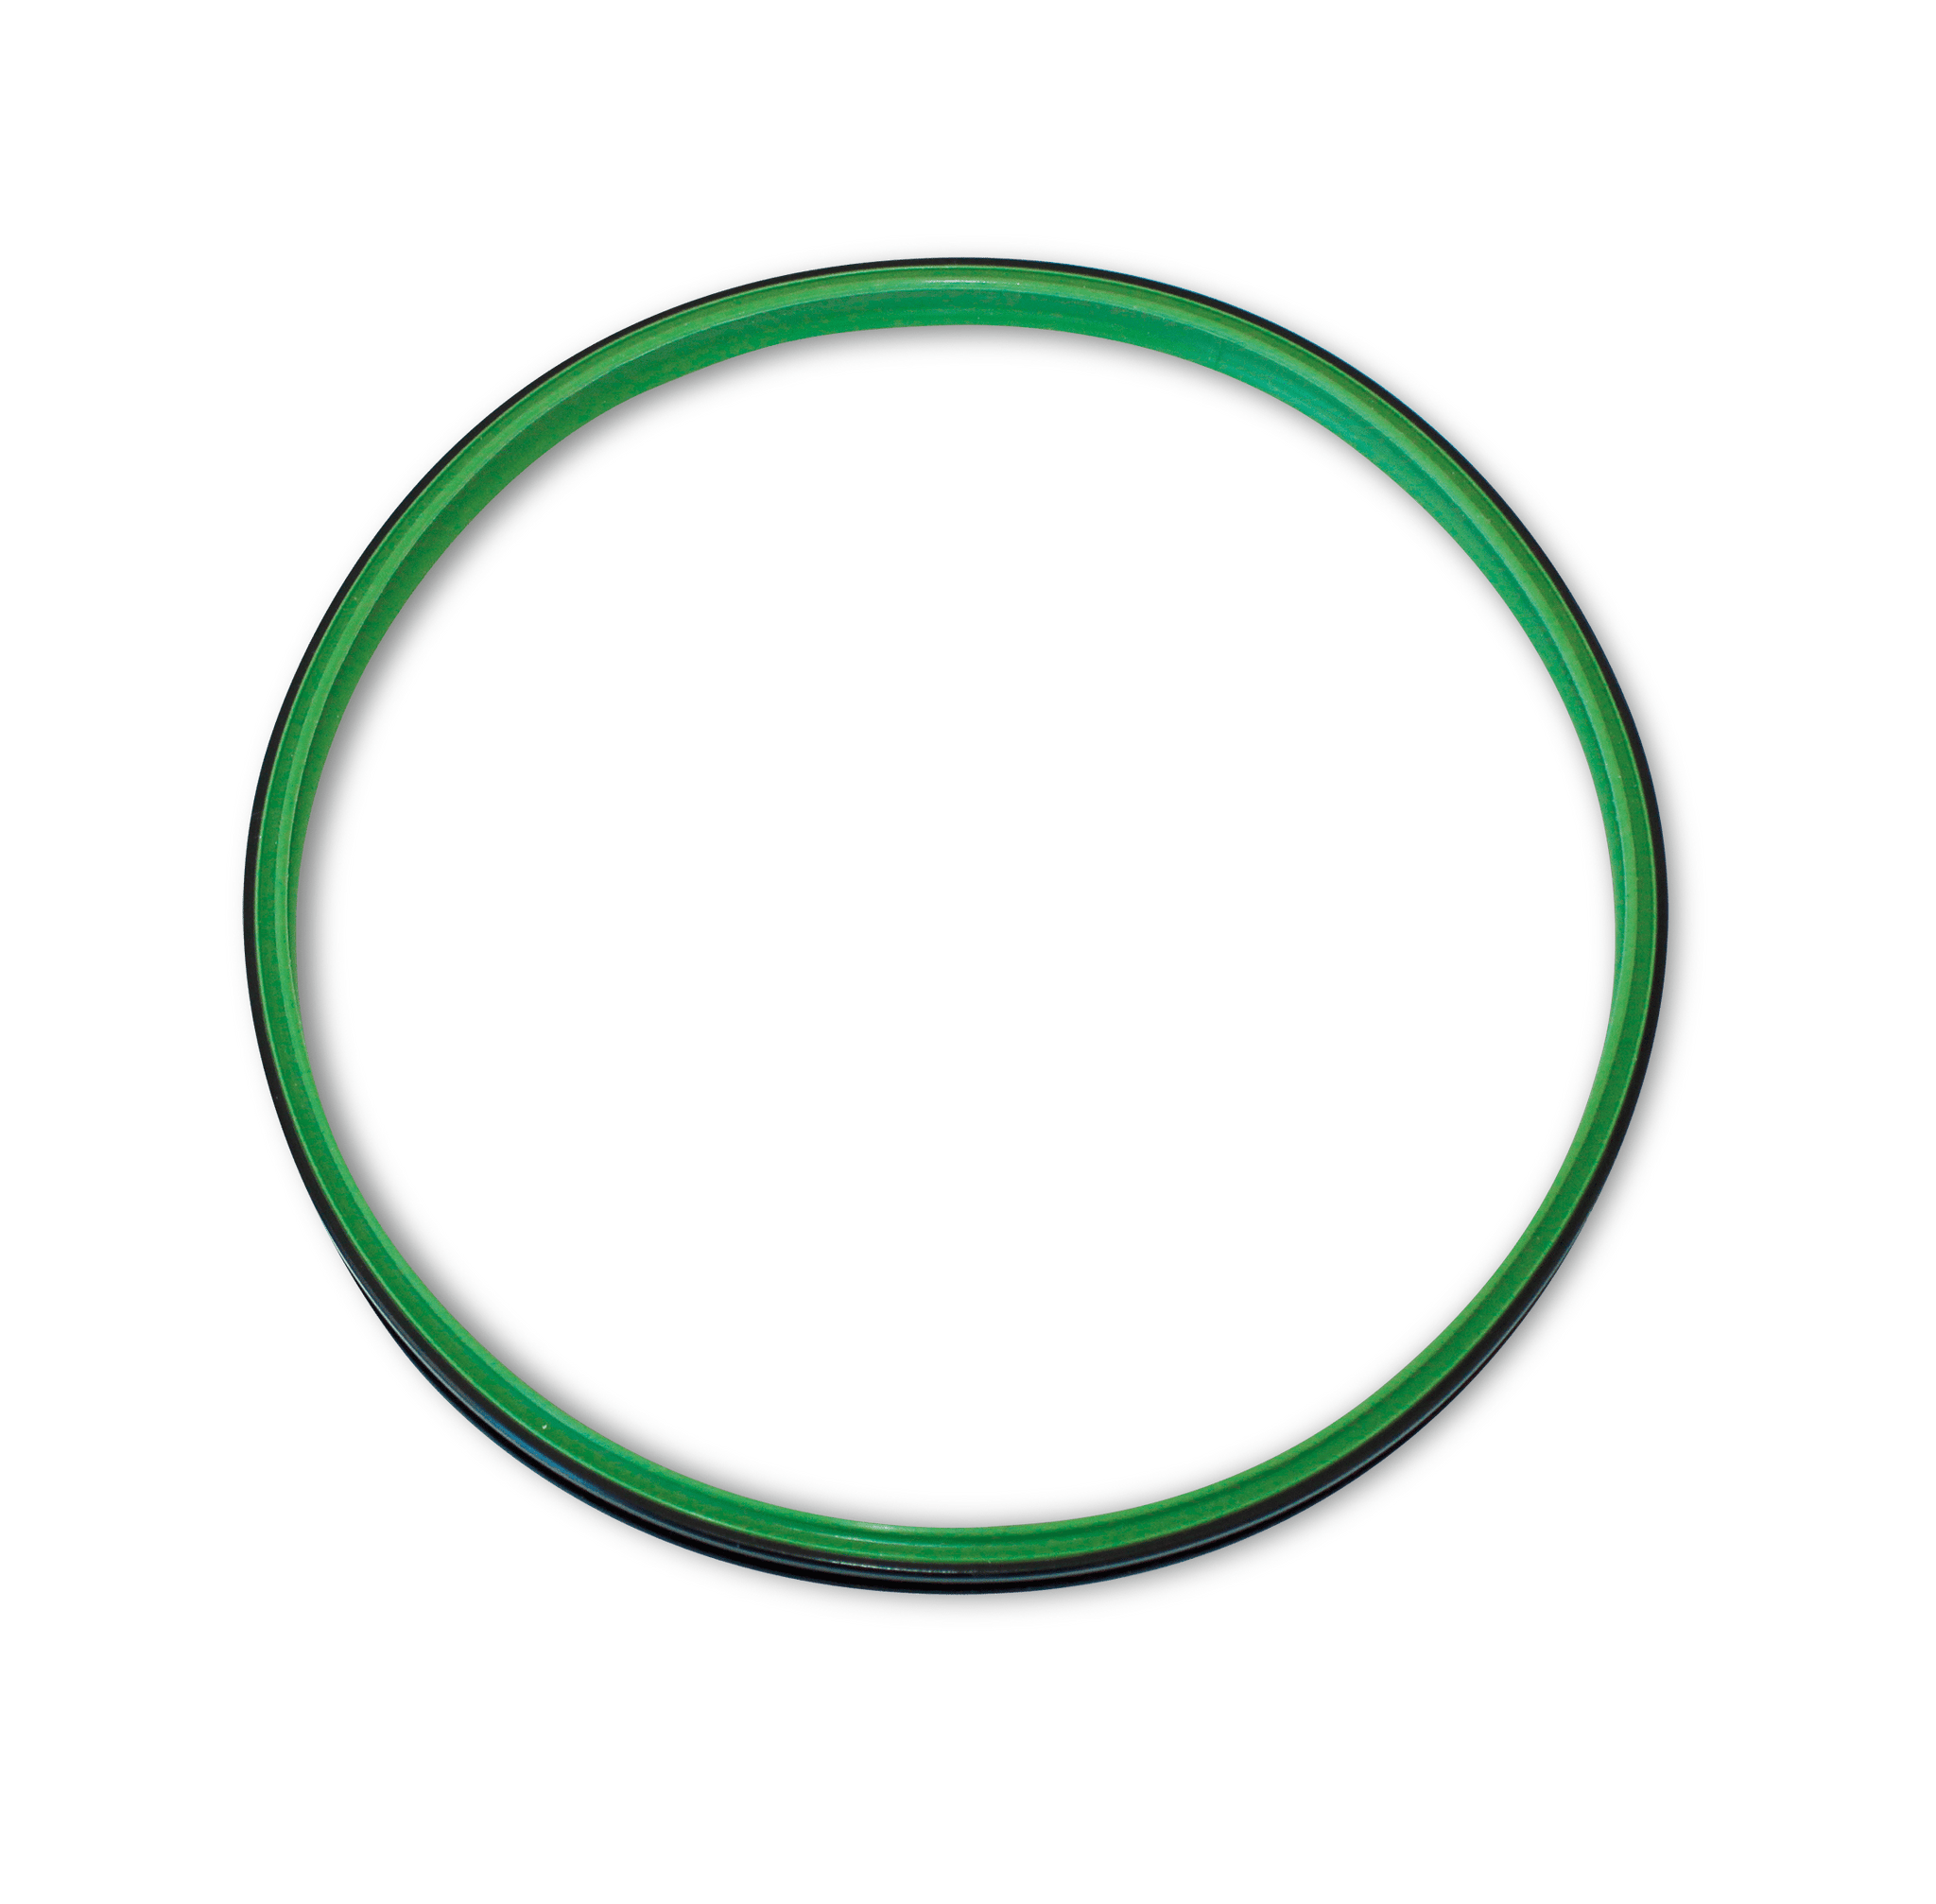 Vorwerk Parts Thermomix TM31 Silicone Lid Seal Green